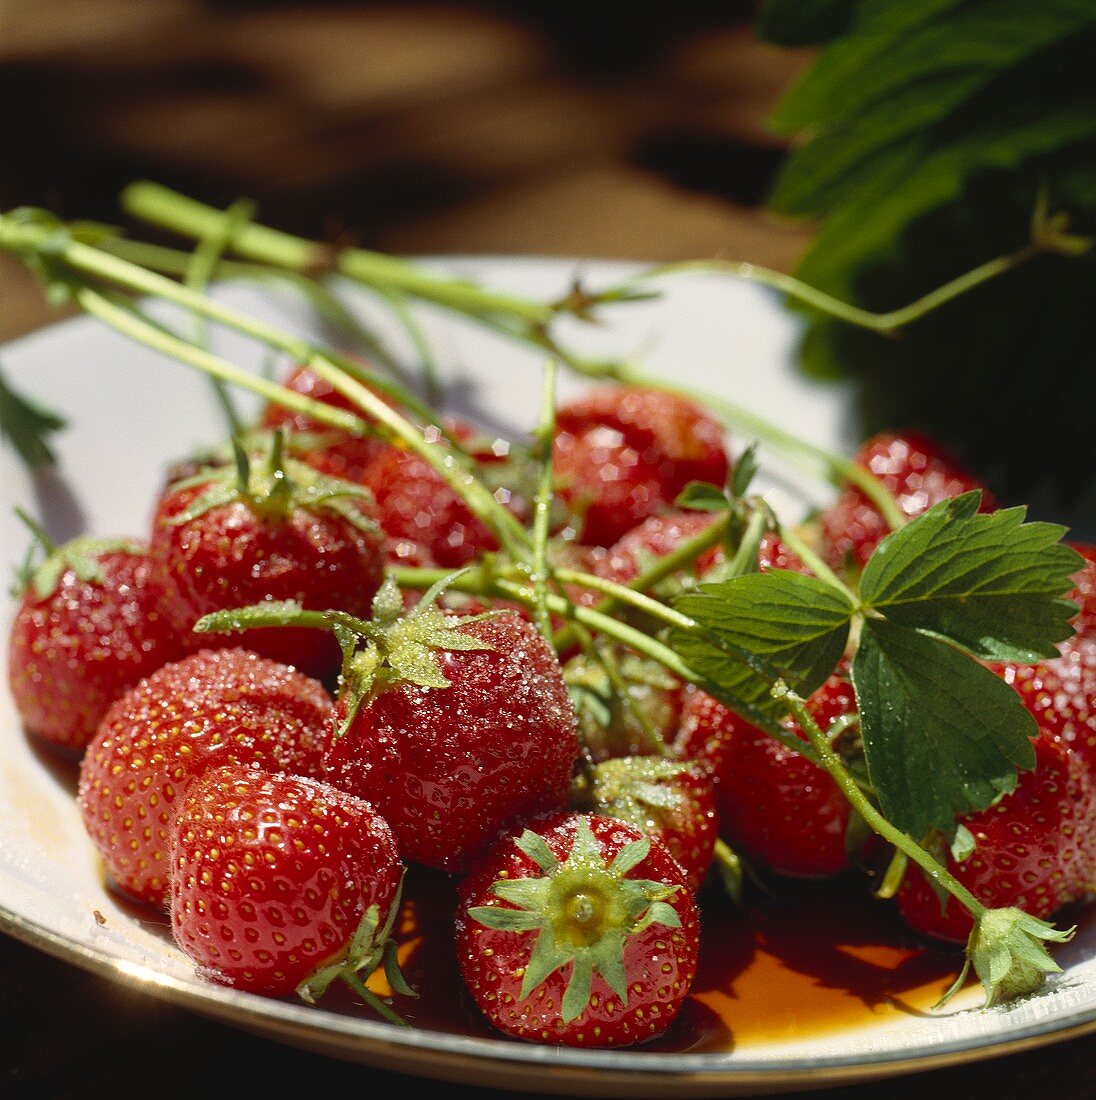 Strawberries in balsamic vinegar